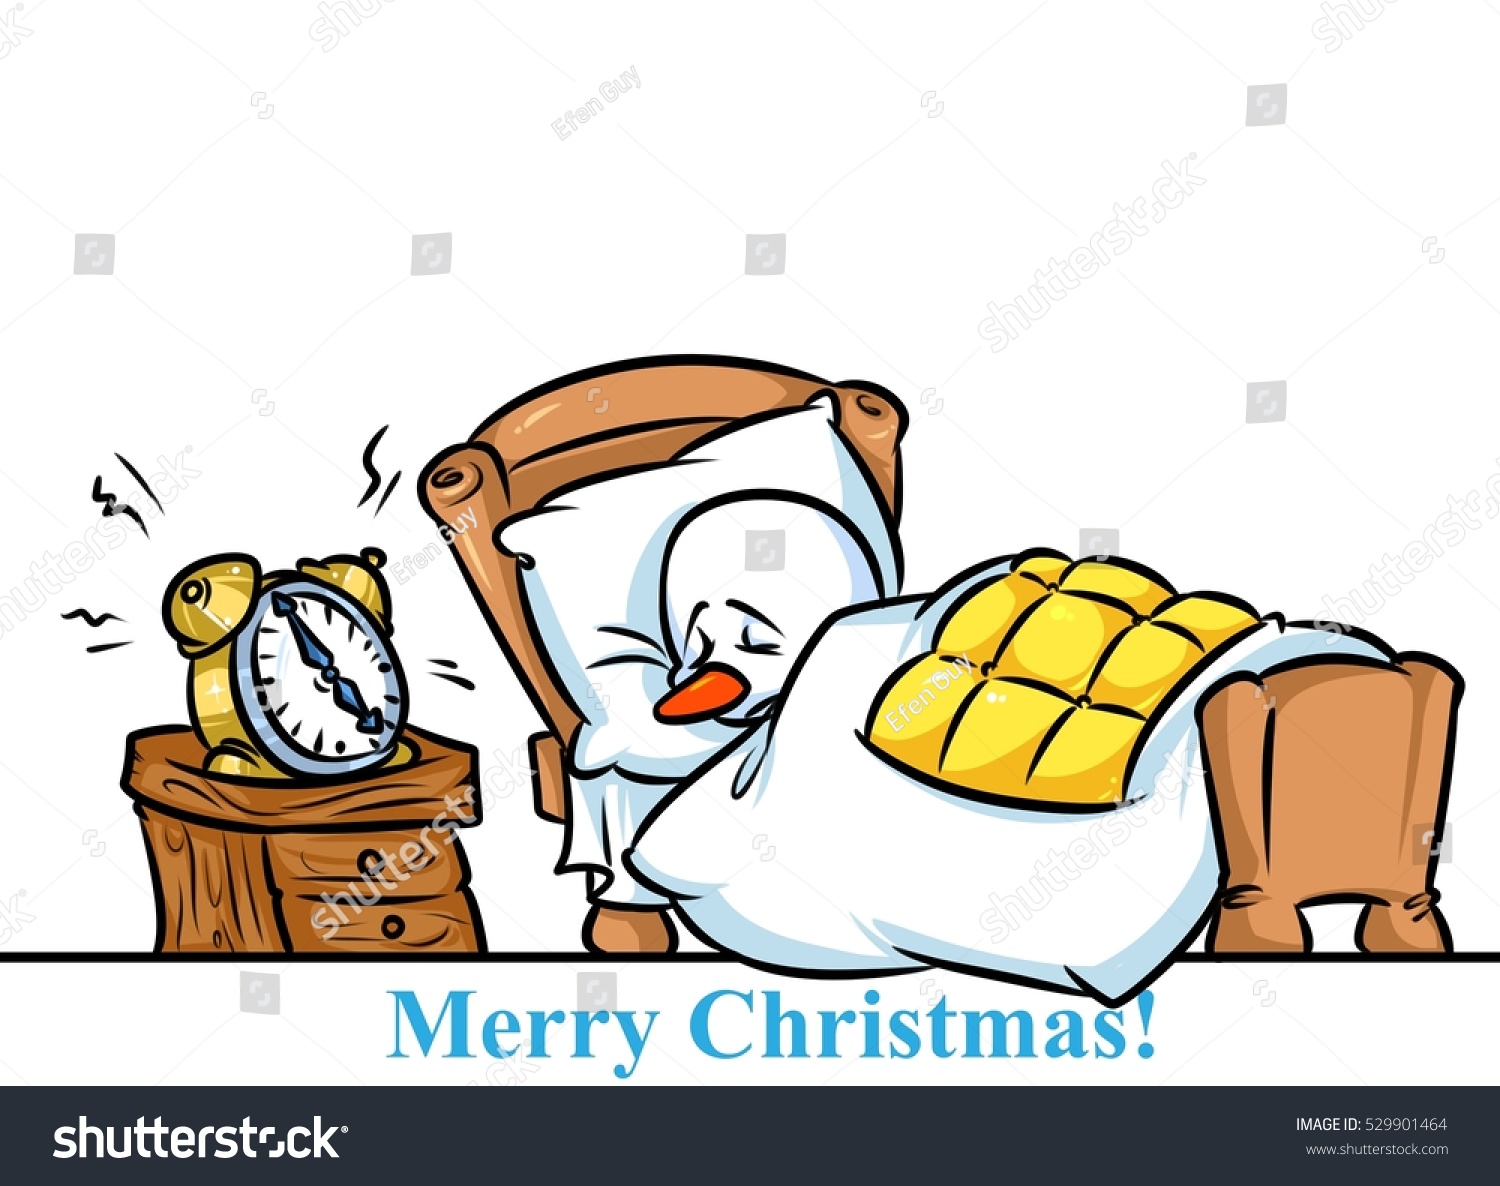 Christmas snowman character sleeping bed alarm clock cartoon illustration